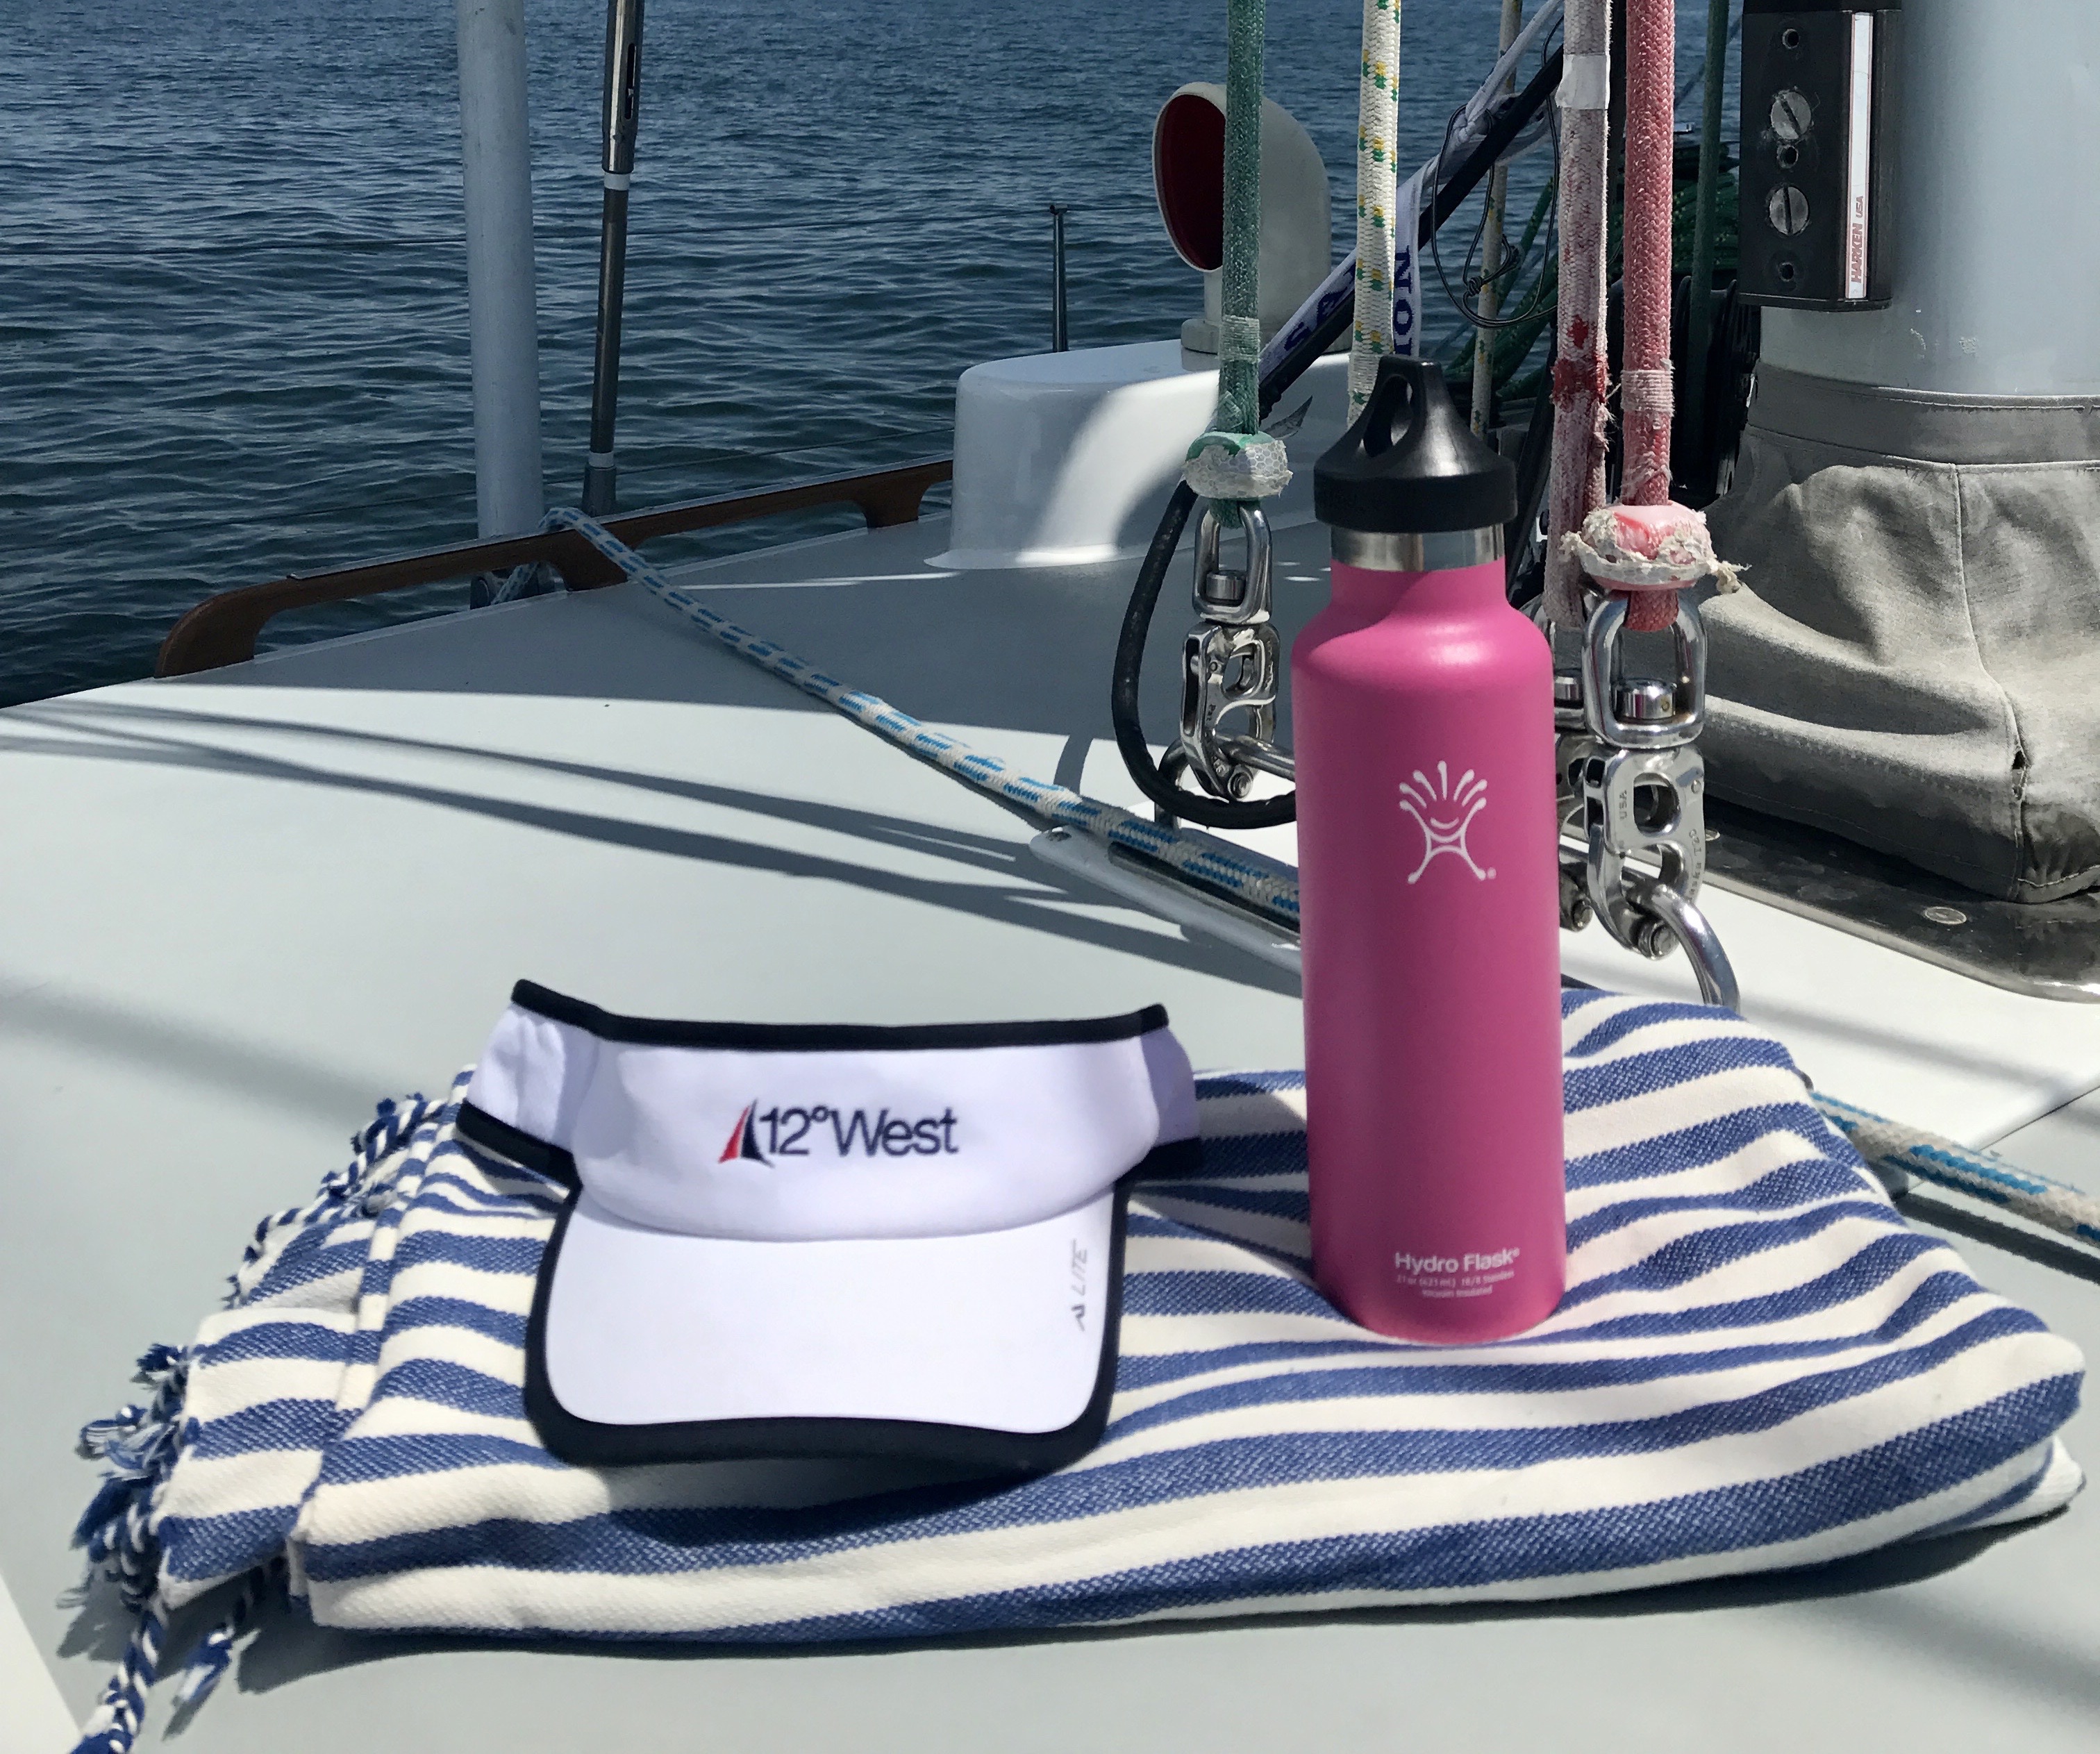 Get ready for sailing season - sailing bag essentials - 12° West